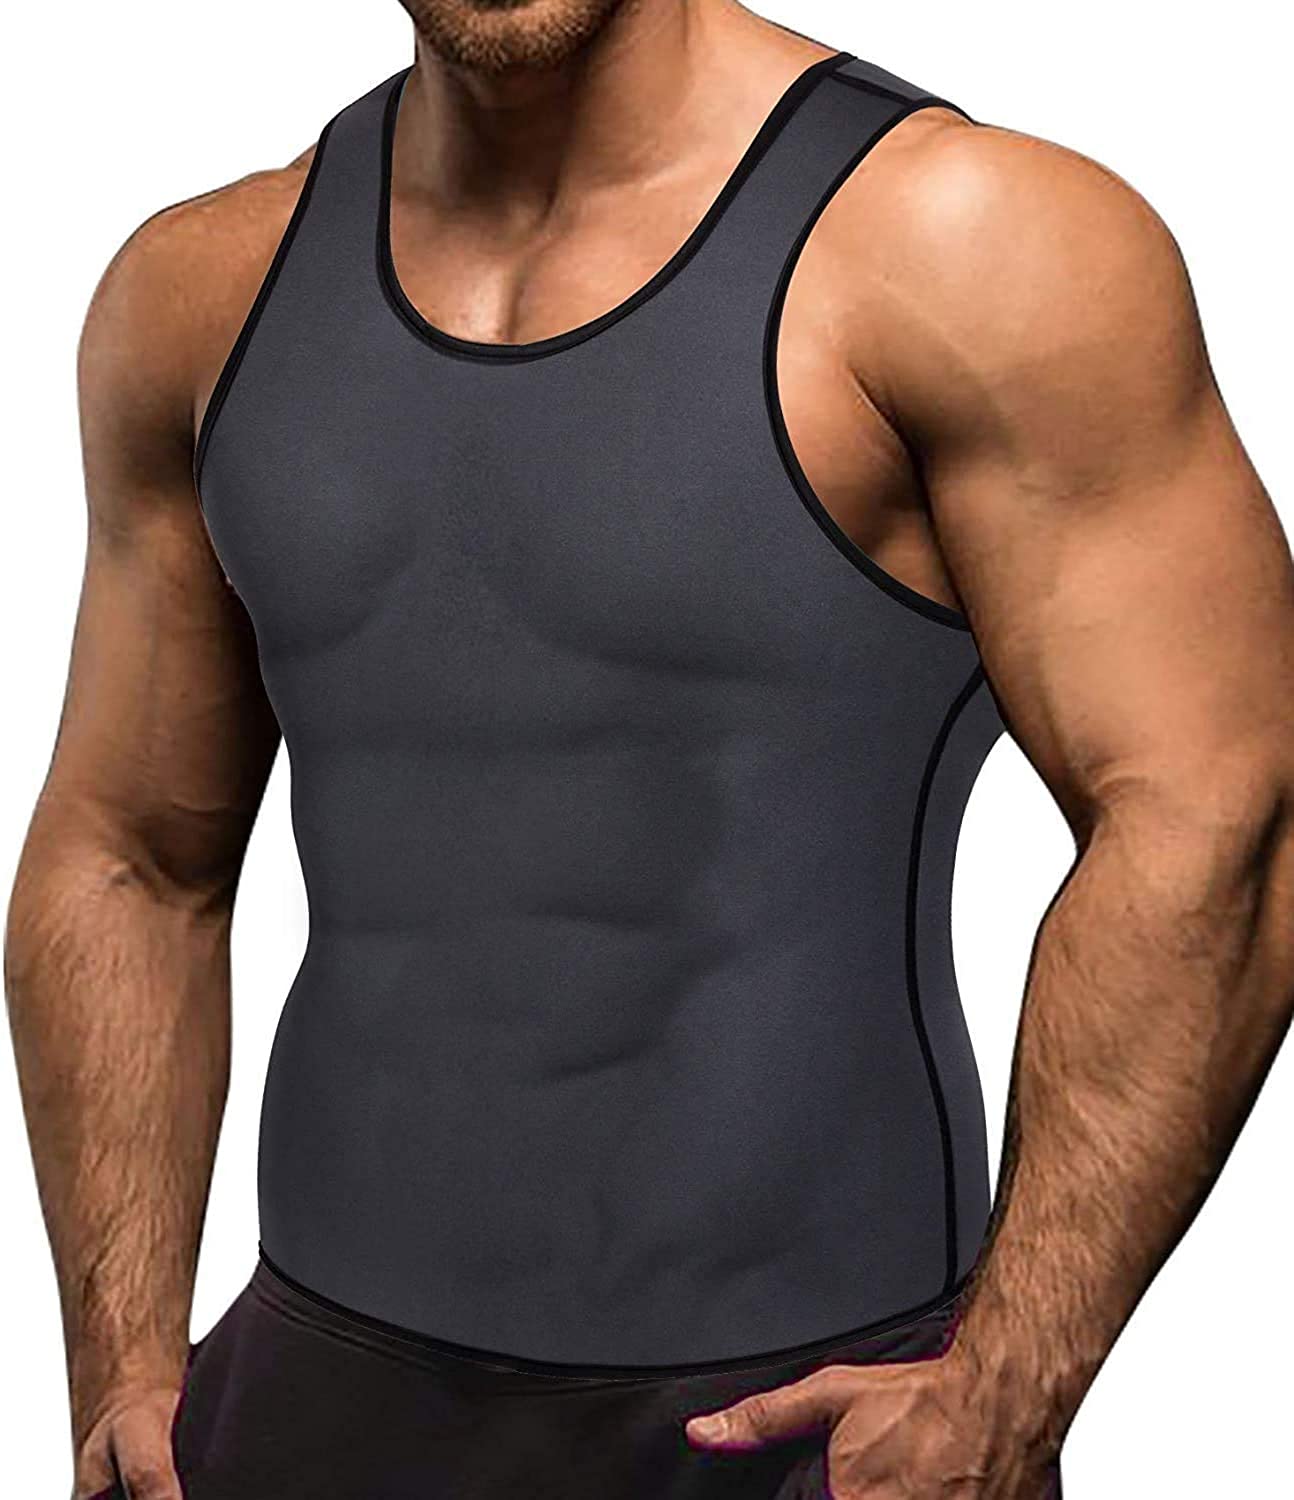 DoLoveY Men Neoprene Sauna Vest Weight Loss Sweat Suit Hot Corset Workout Body Shaper Waist Trainer 